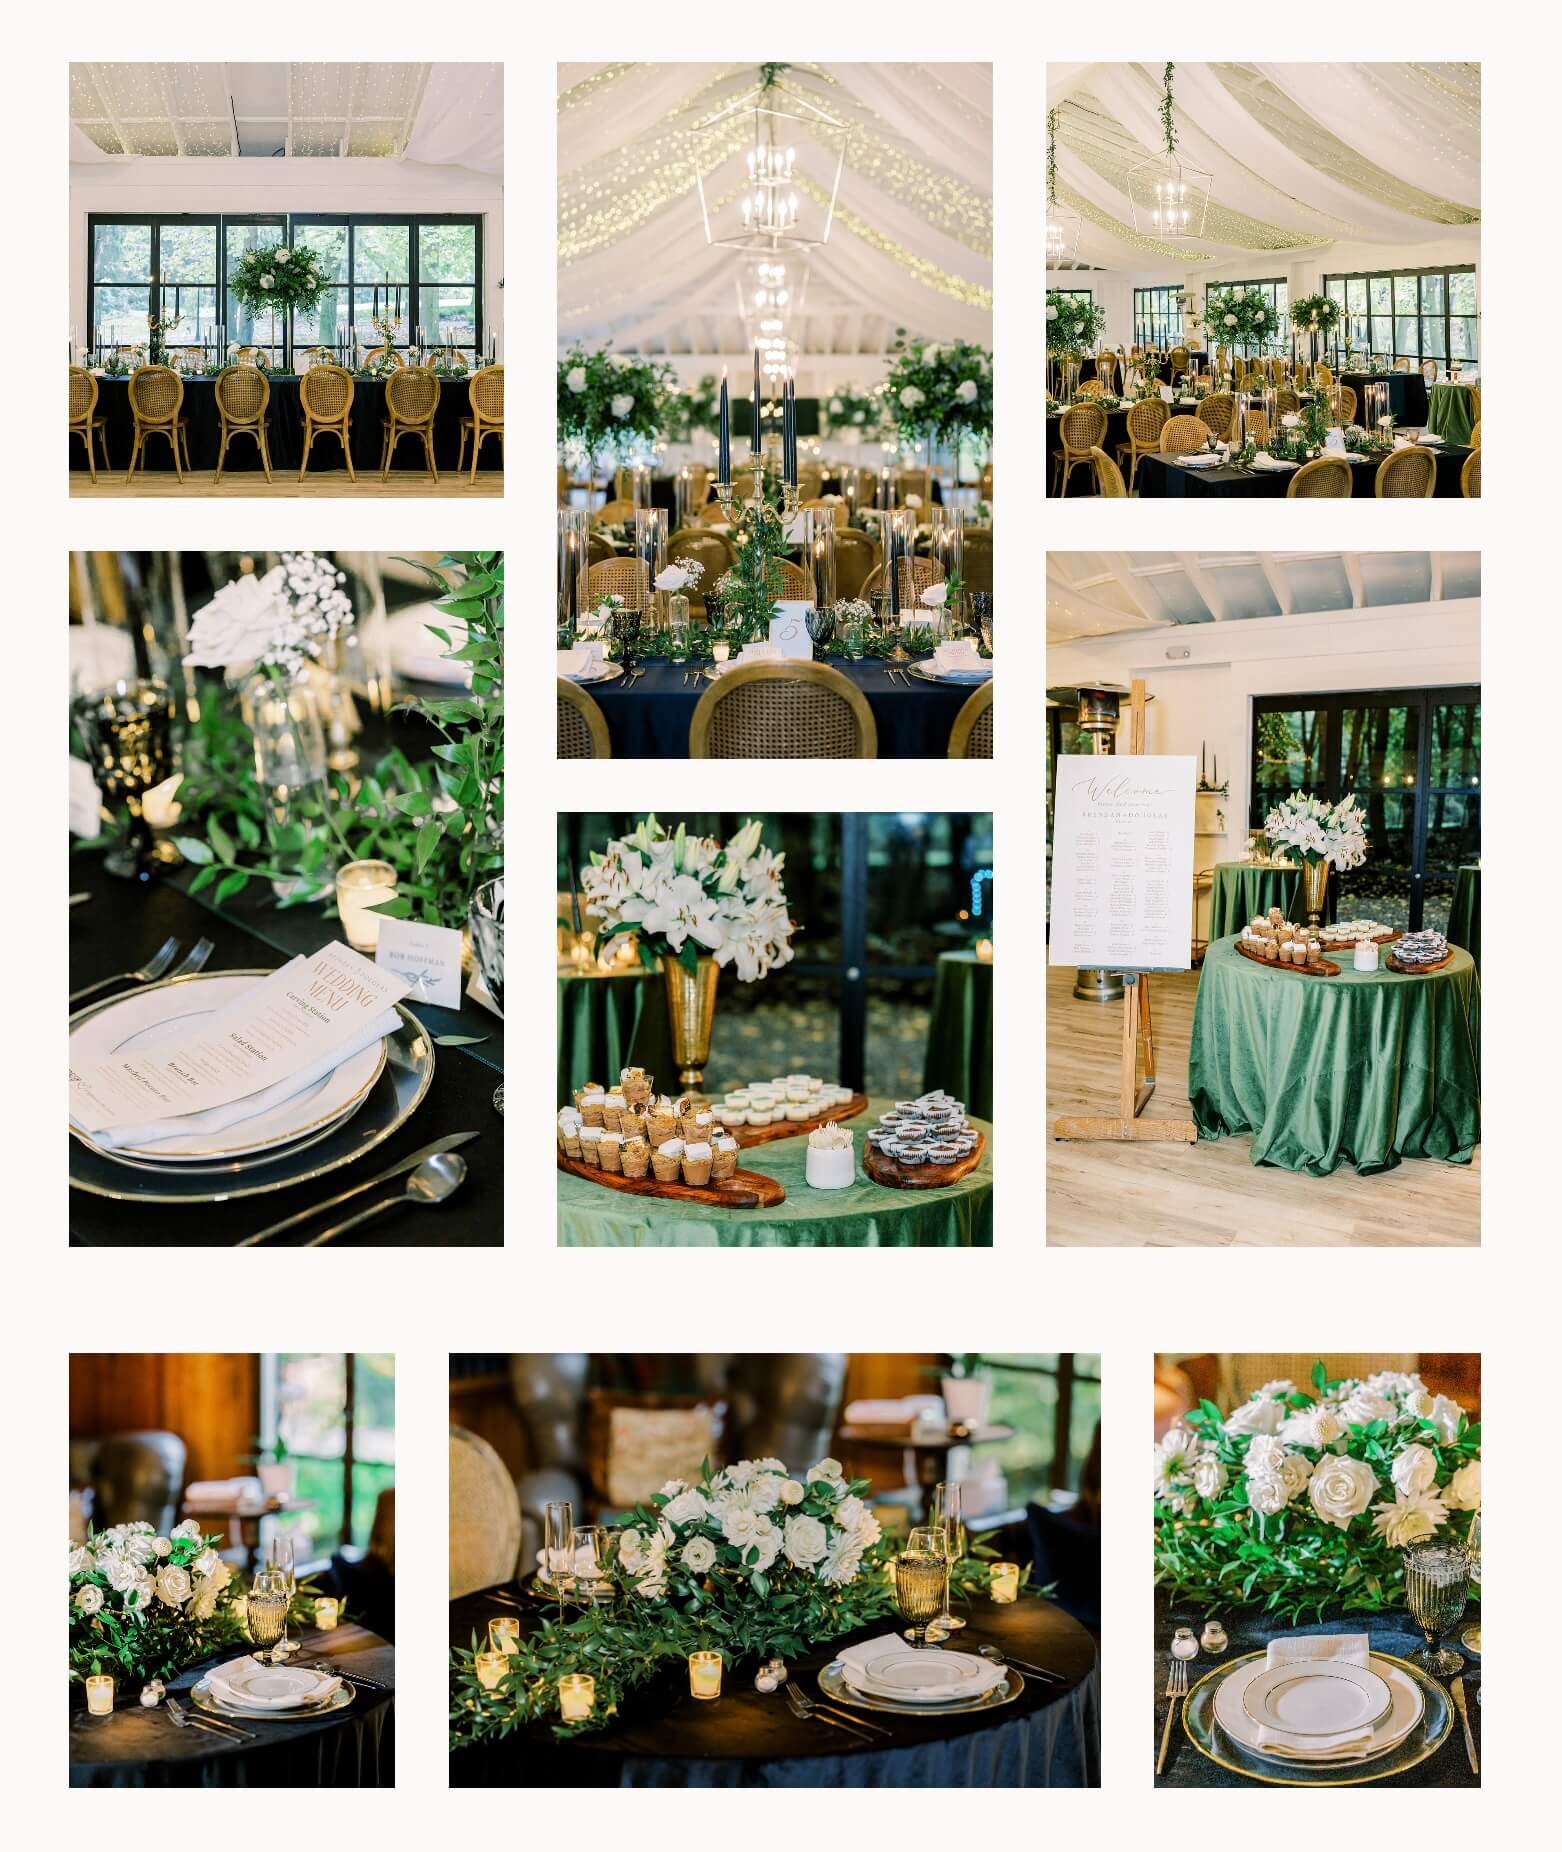 Greencrest Manor wedding reception decor emerald and gold color scheme